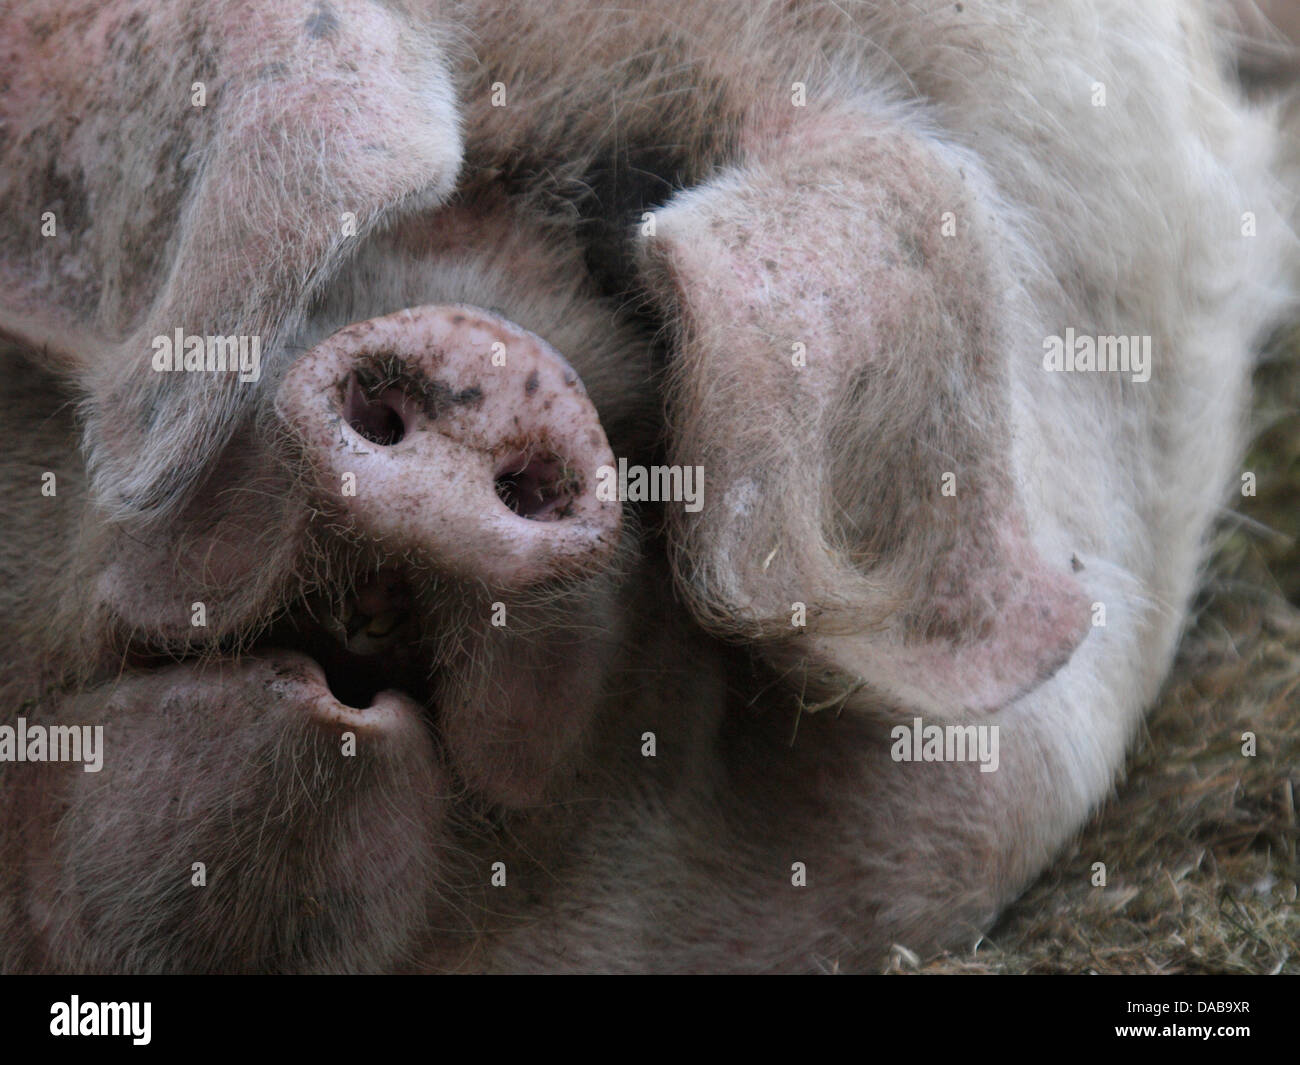 Close up of a pig, UK 2013 Stock Photo